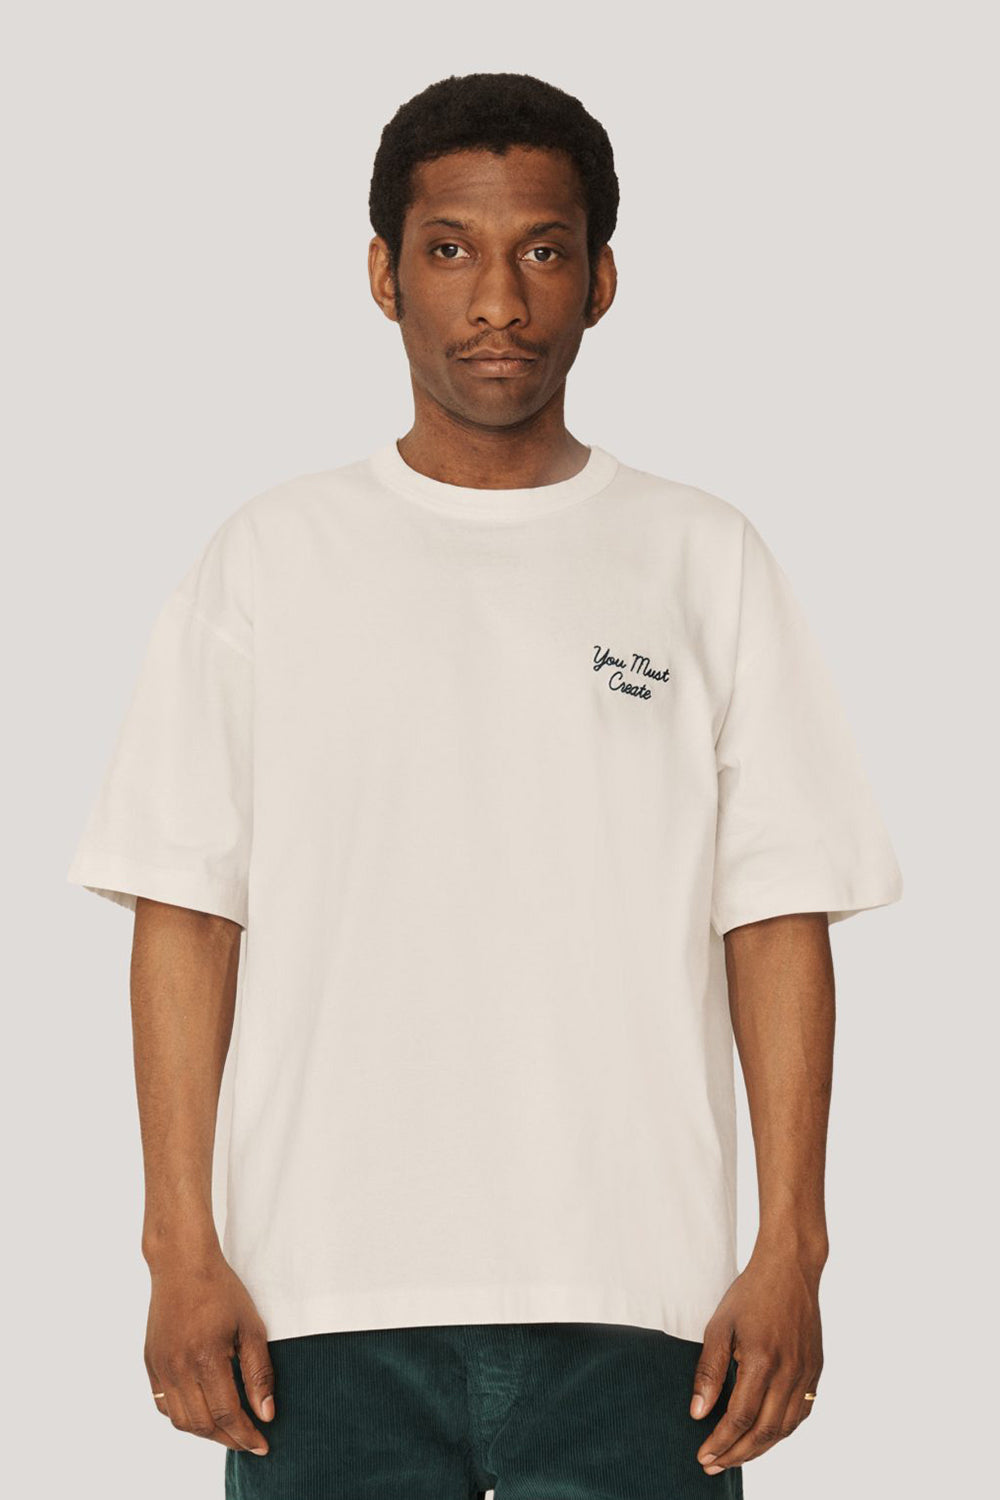 T-Shirts | Buy Mens T-Shirts Online | The Standard Store Australia